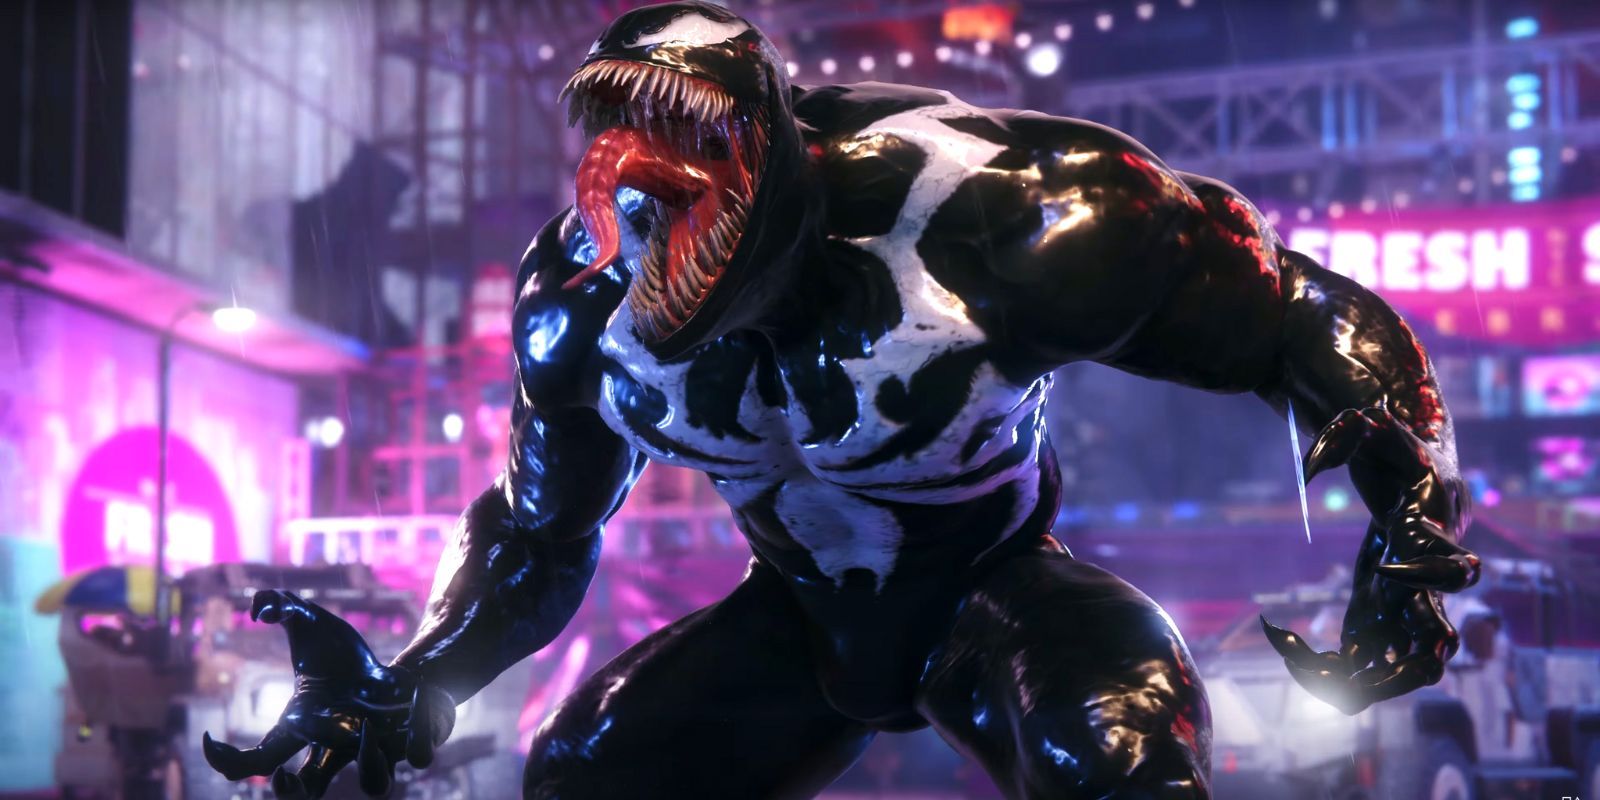 Marvel's Spider-Man 2: Tony Todd's Venom Voice Scared The Rest Of